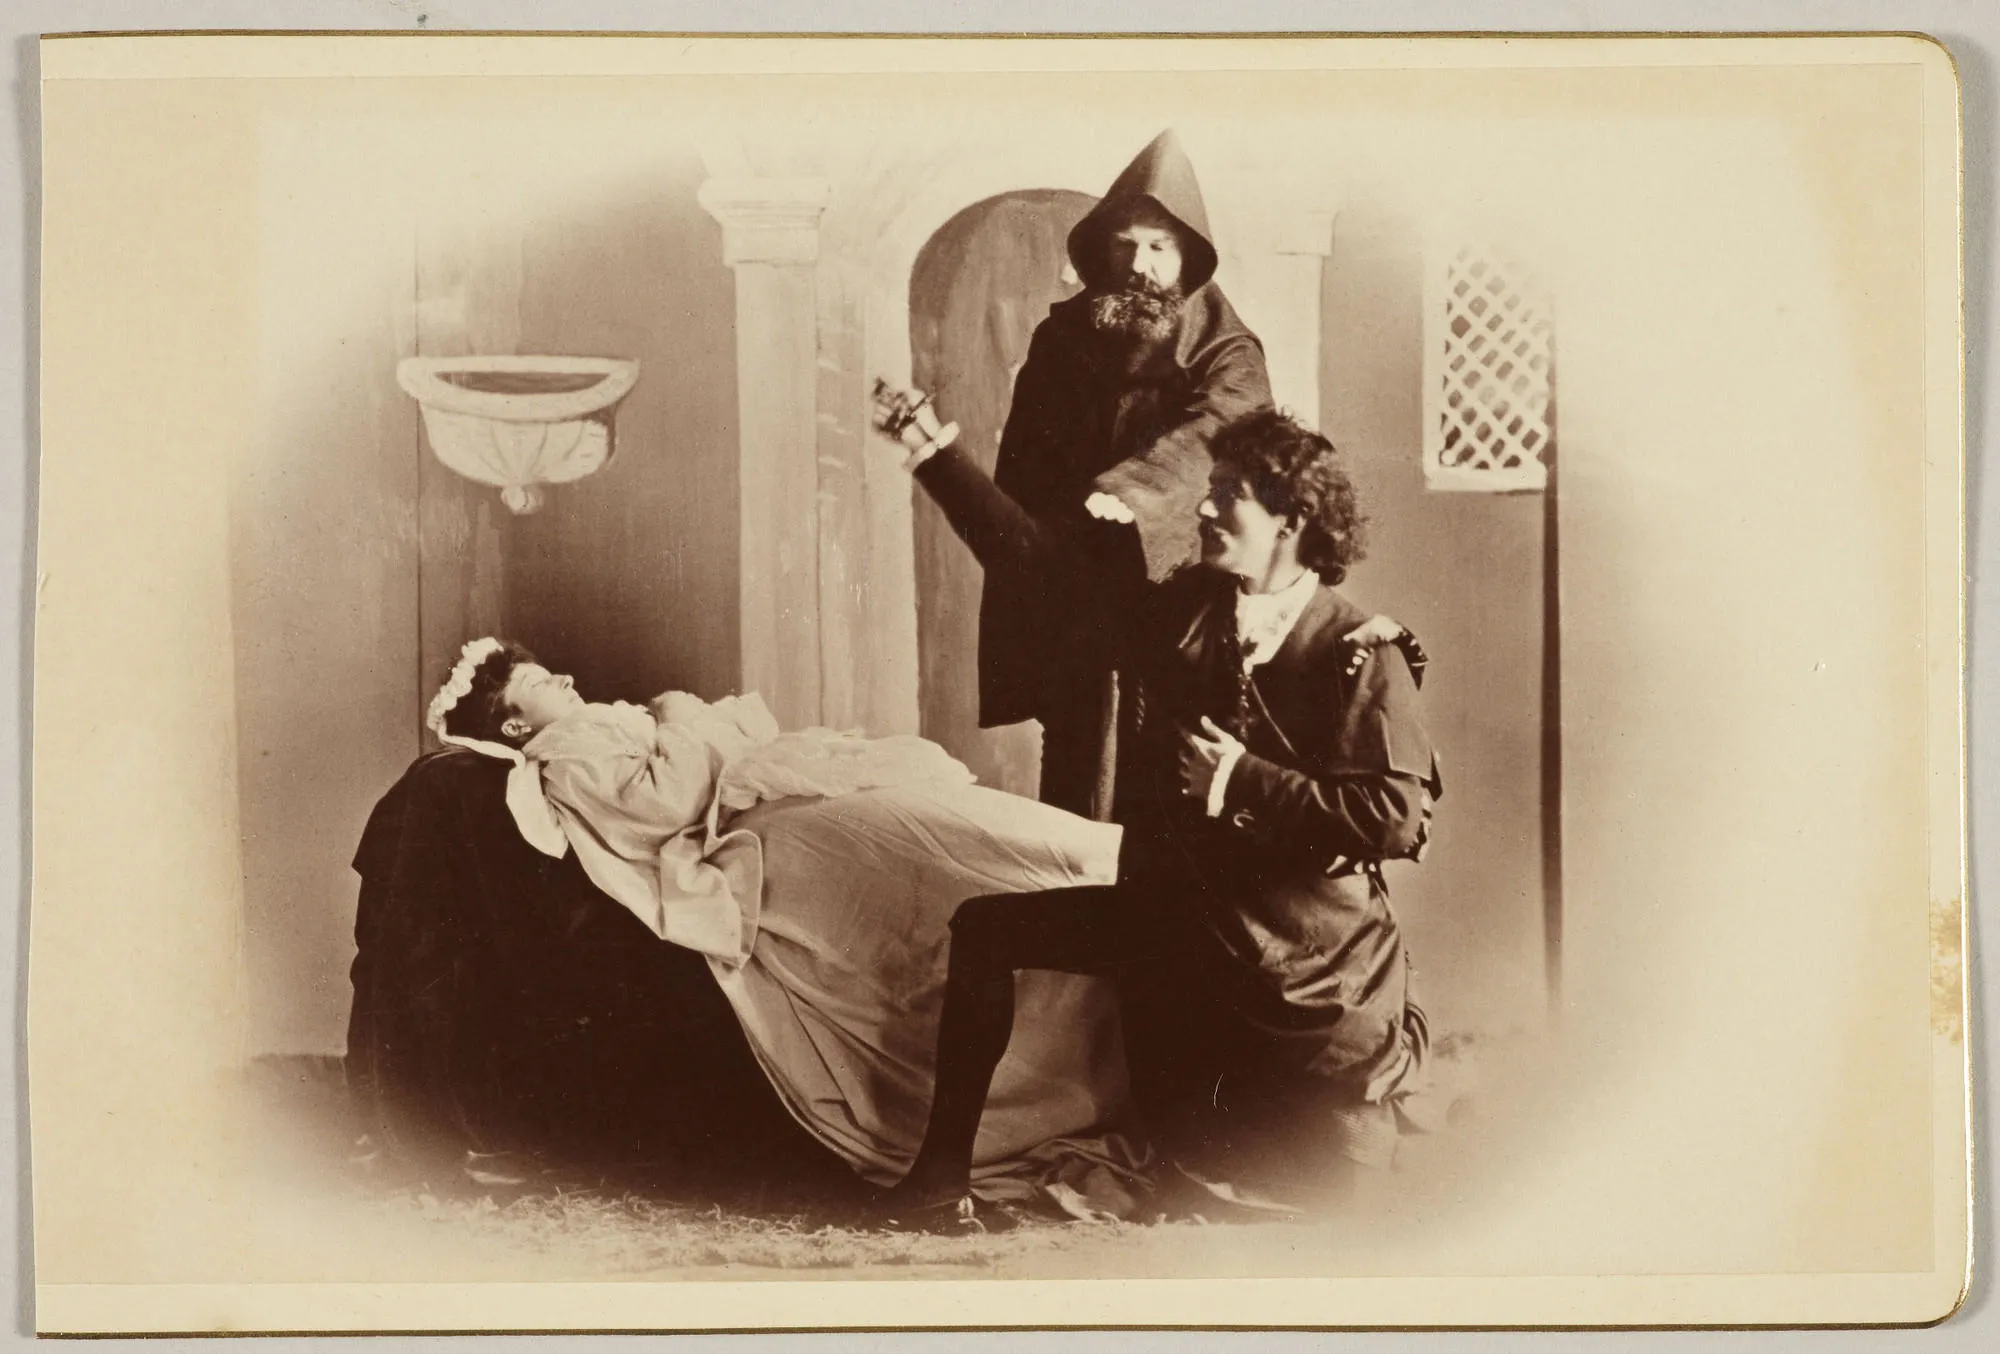 Balmoral Tableau Vivants: 'Romeo' 6 - 6 Oct 1888. Source: Royal Collection Trust. 